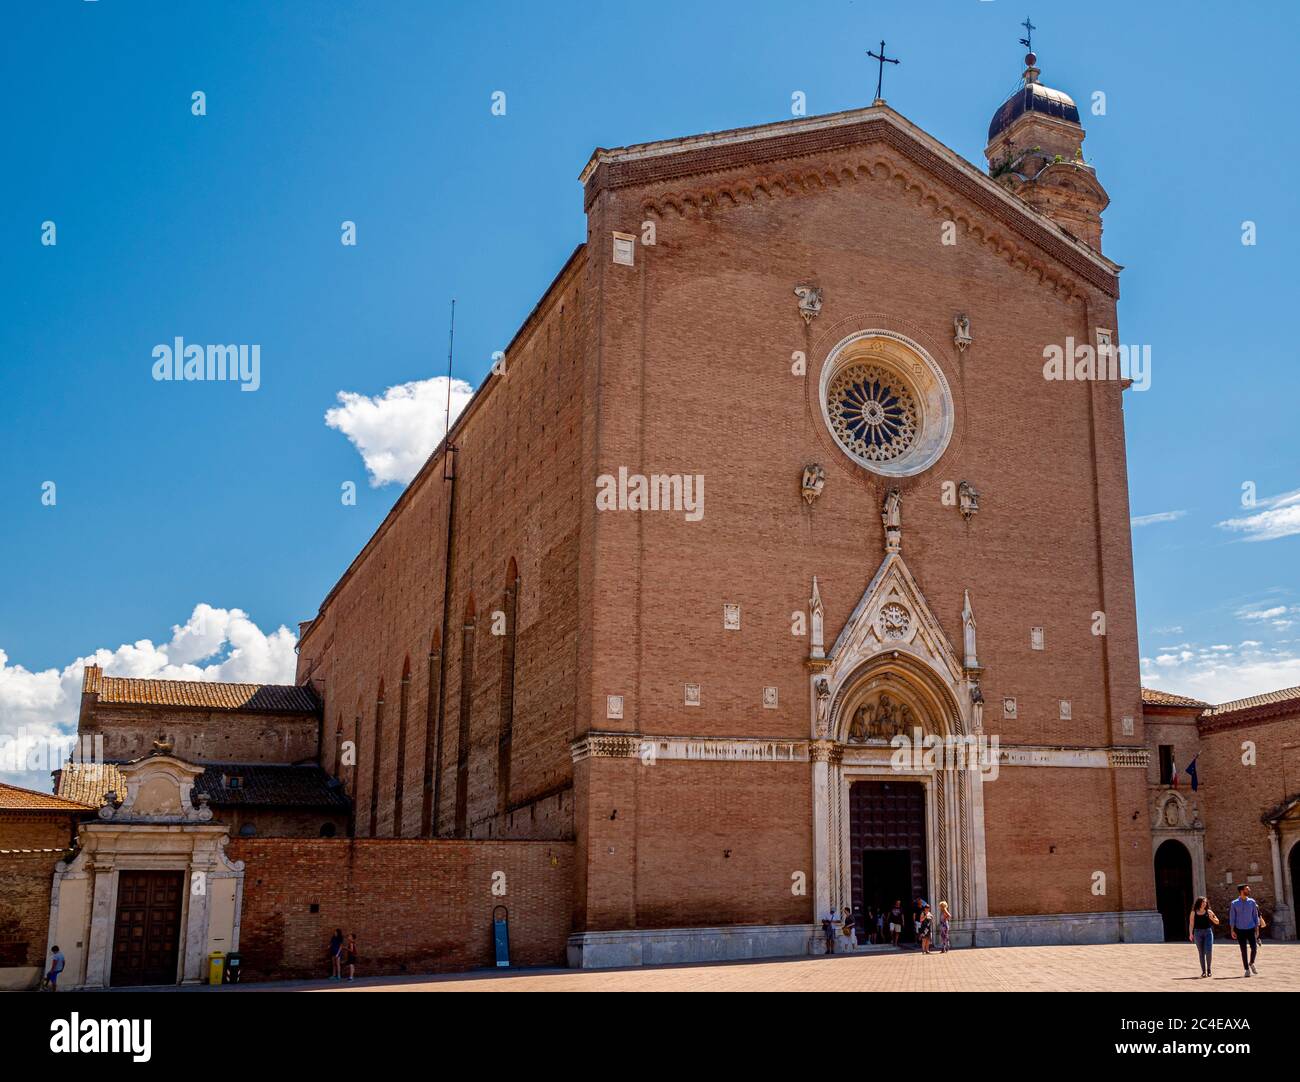 Basilica di San Francesco, Siena. Italy Stock Photo - Alamy